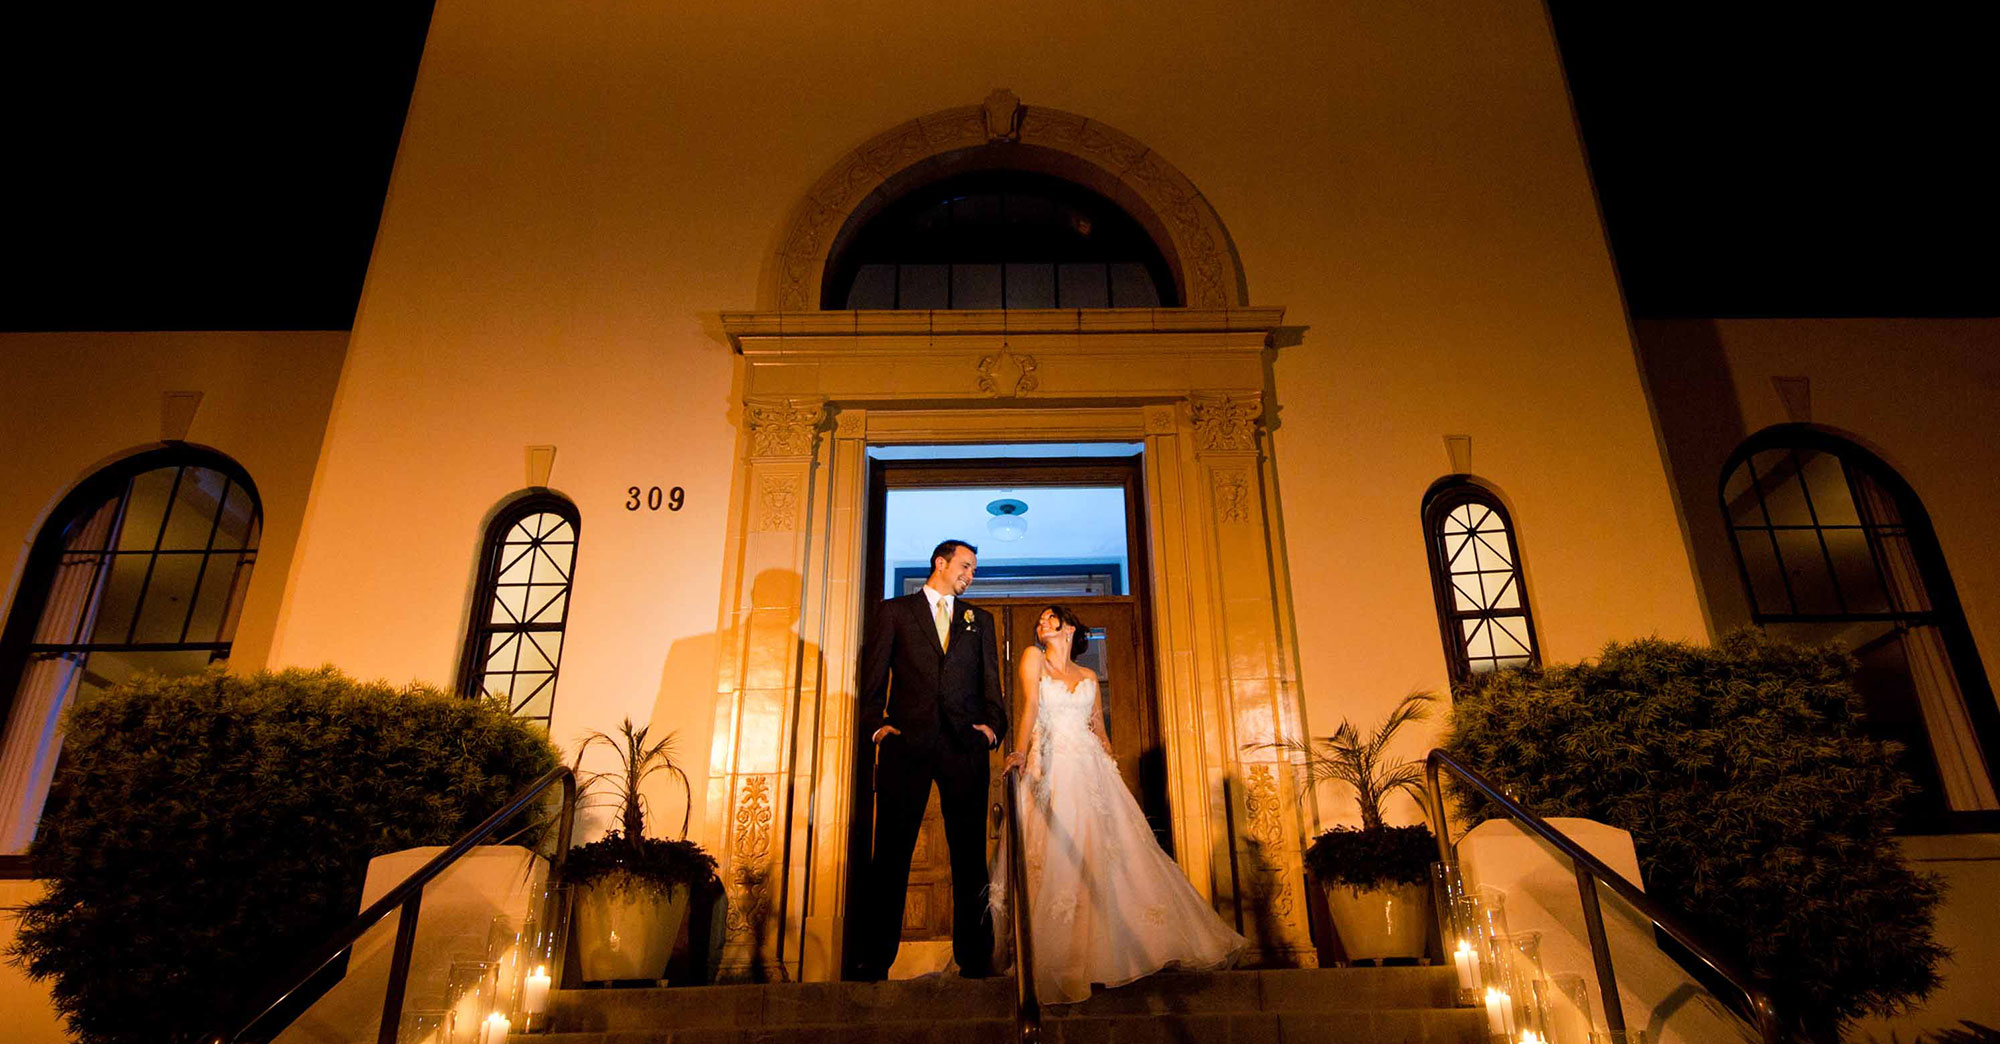 Juliana & Colby’s Redondo Beach Historic Library Wedding featured slider image